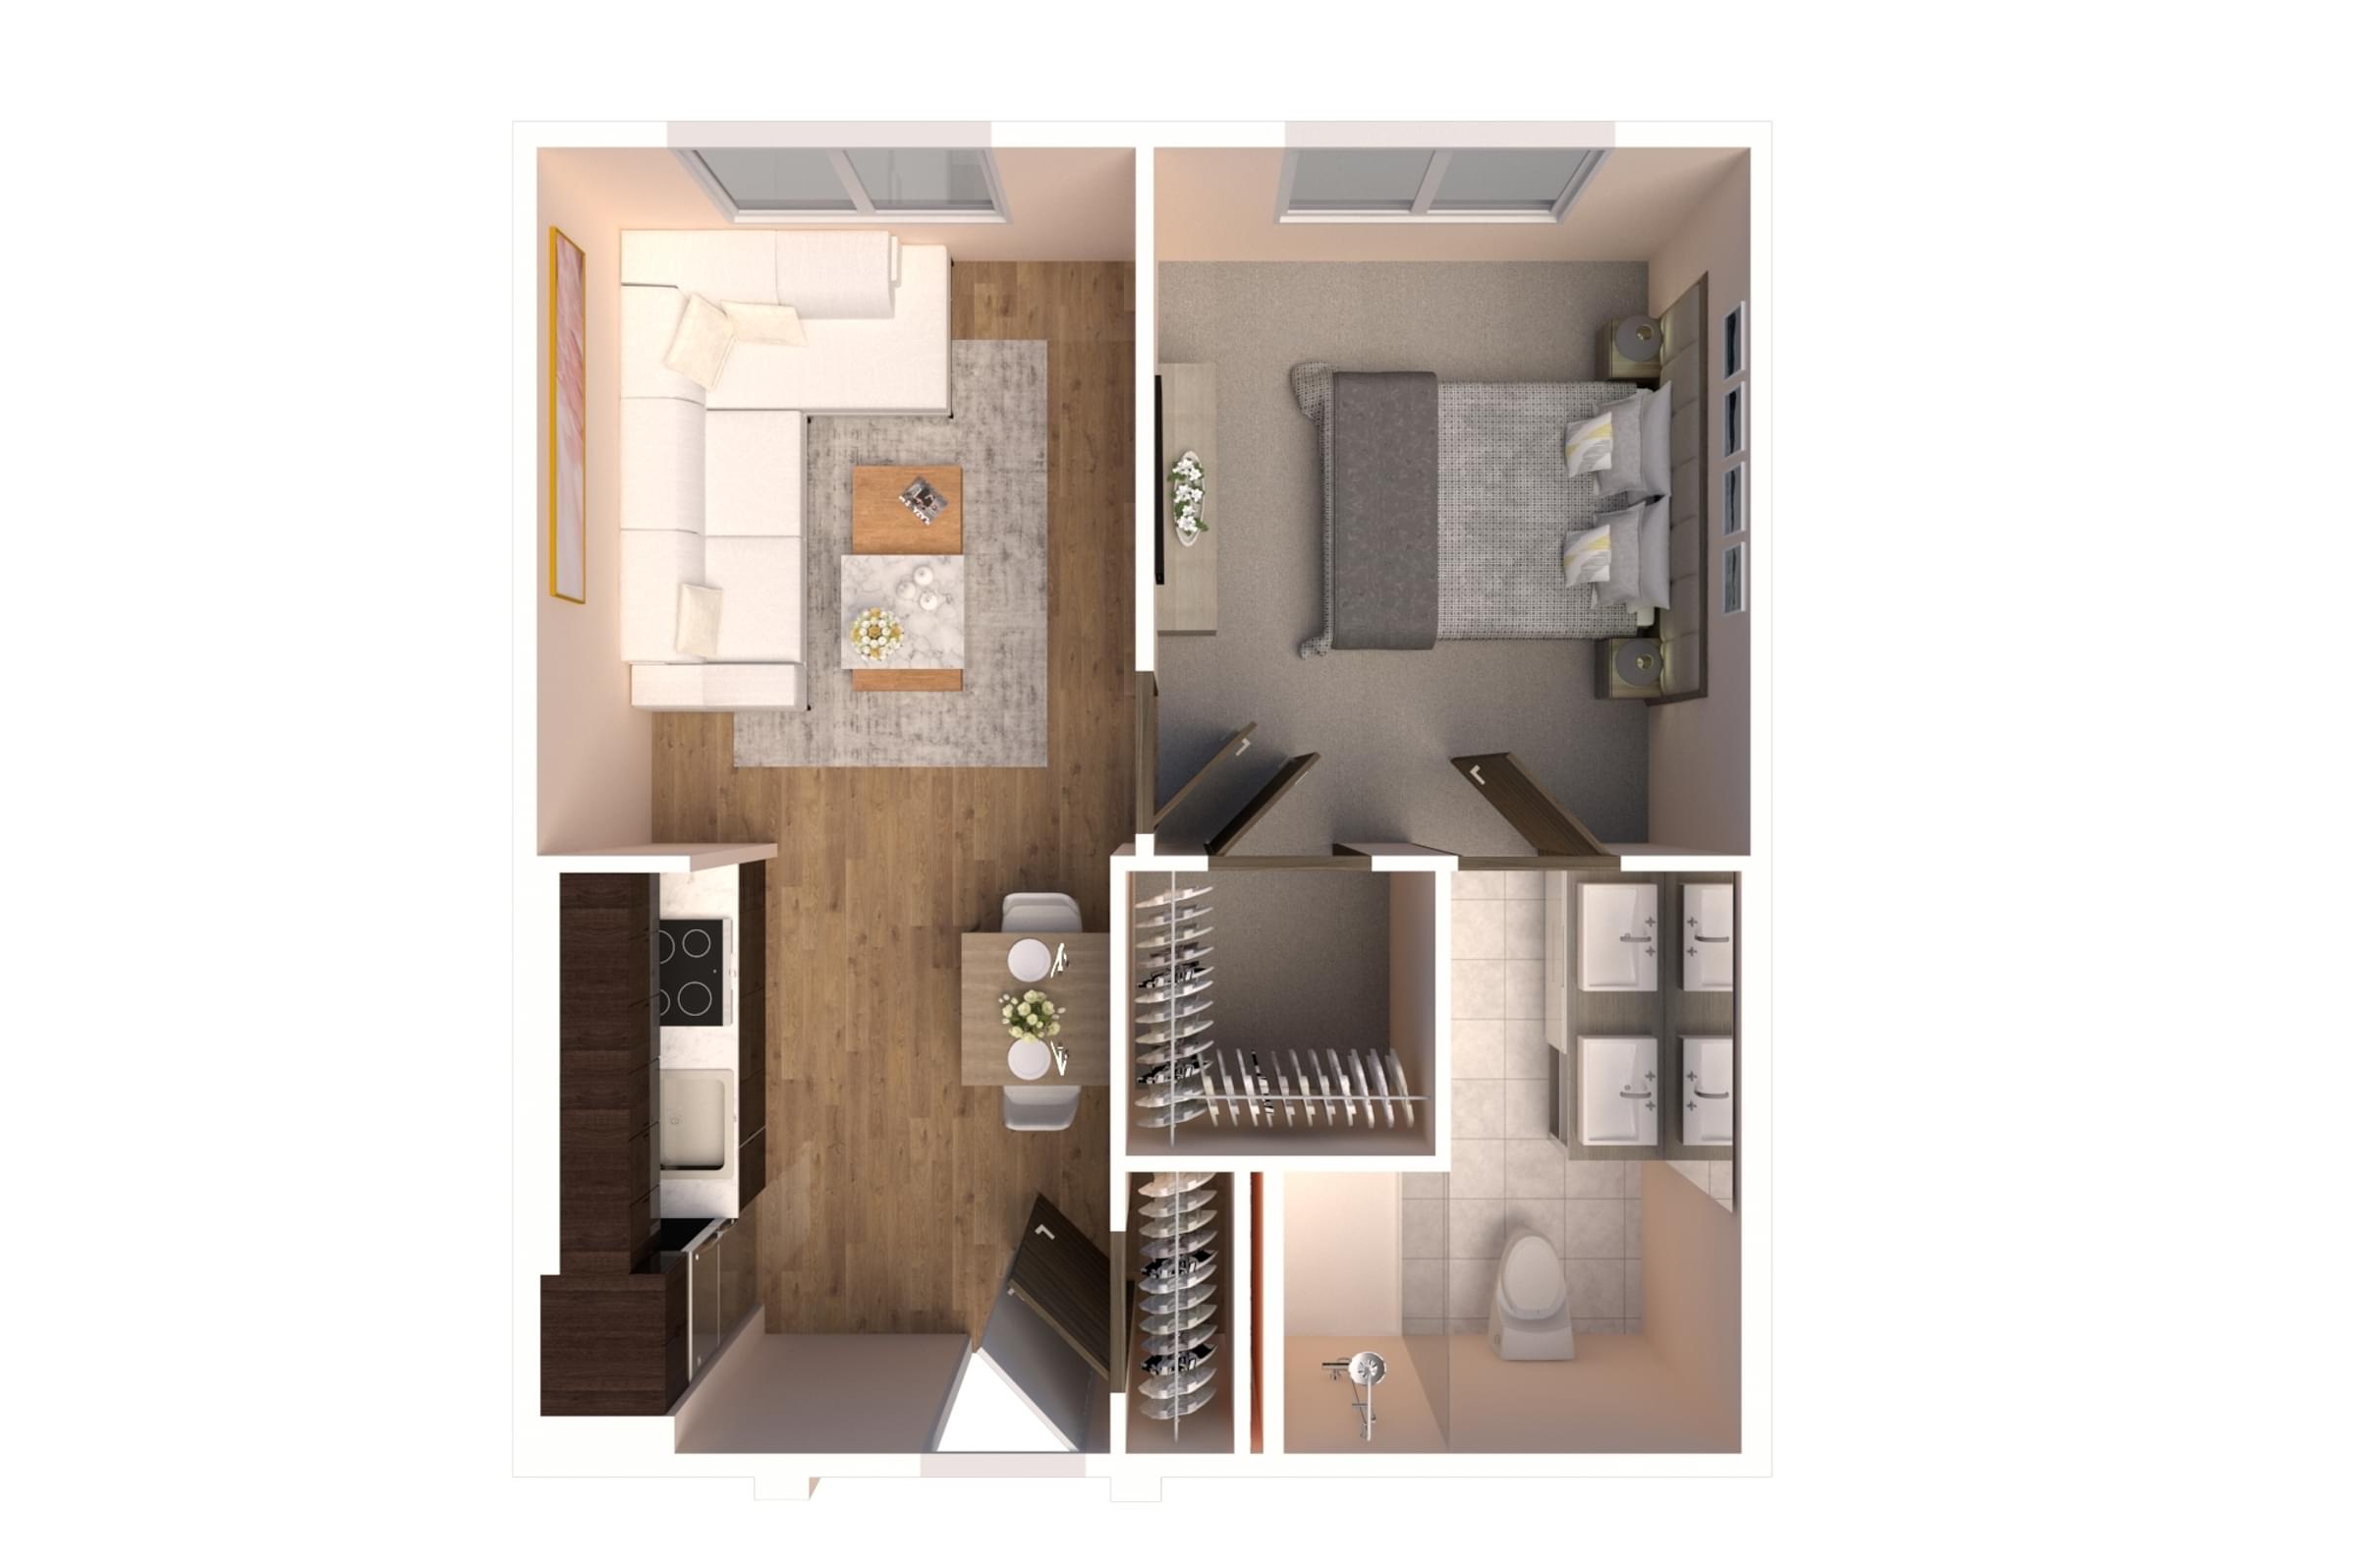 The Preserve at Meridian senior living community one-bedroom floor plan